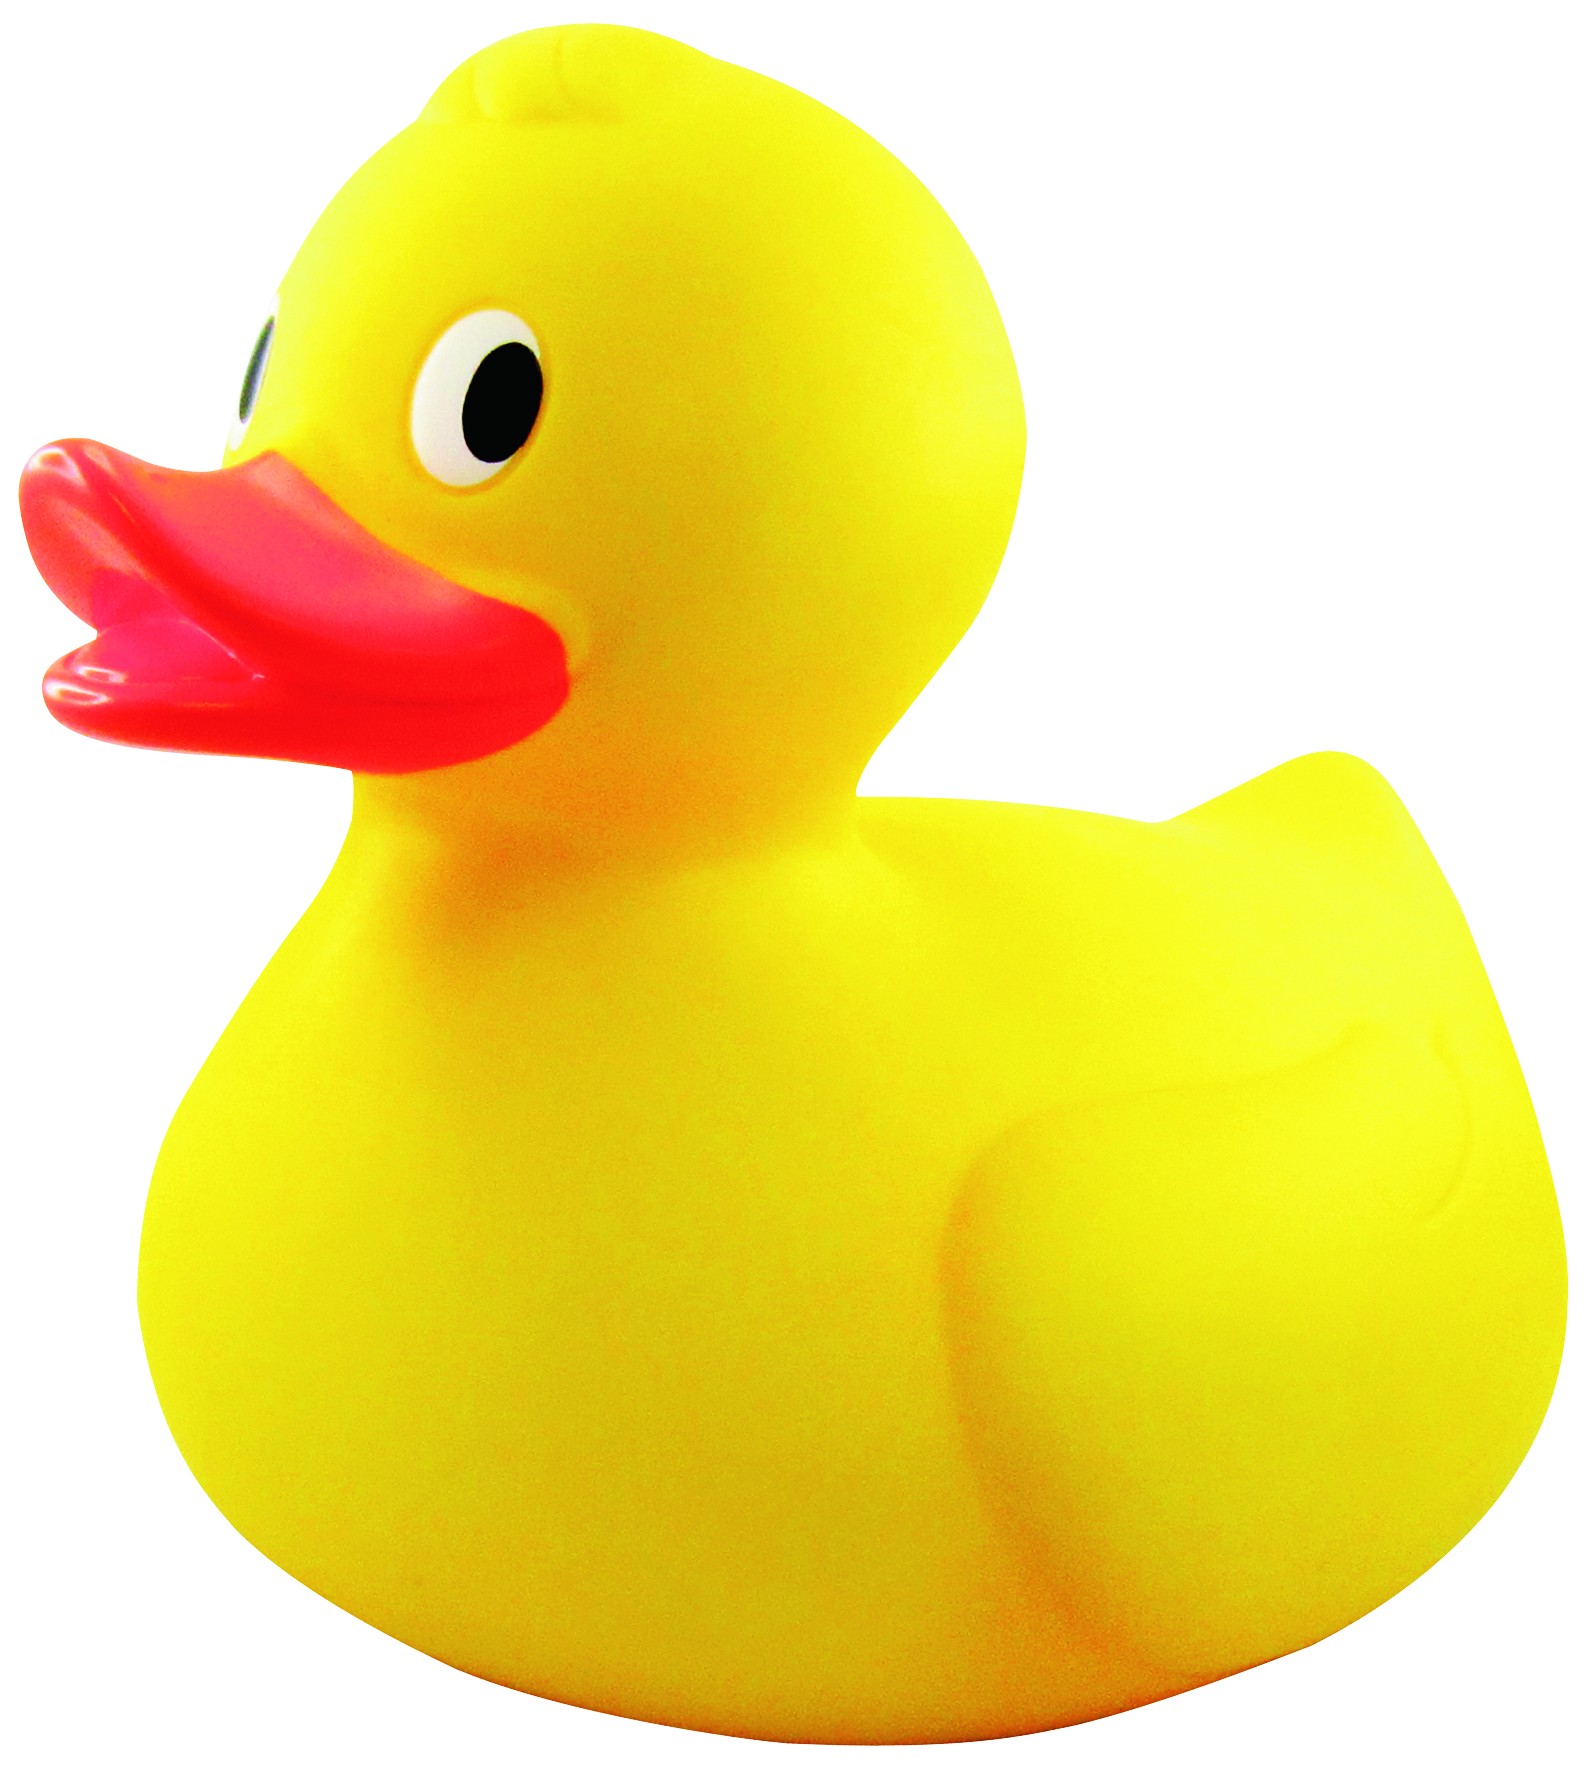 Rubber Duck Picture - Cliparts.co